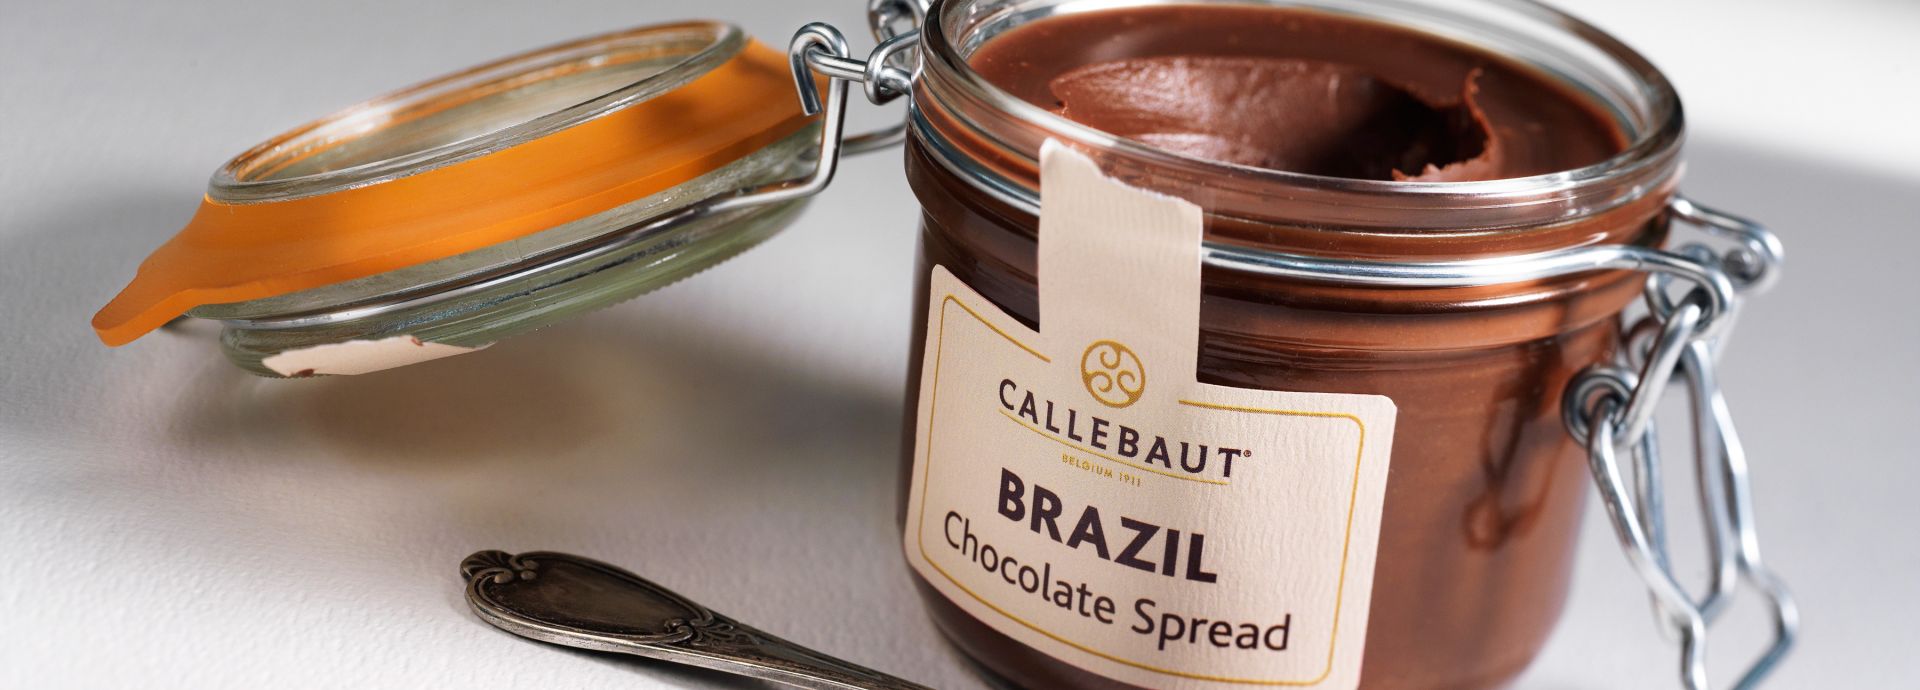 Chocolate and nut spread with Single Origin Brazil chocolate